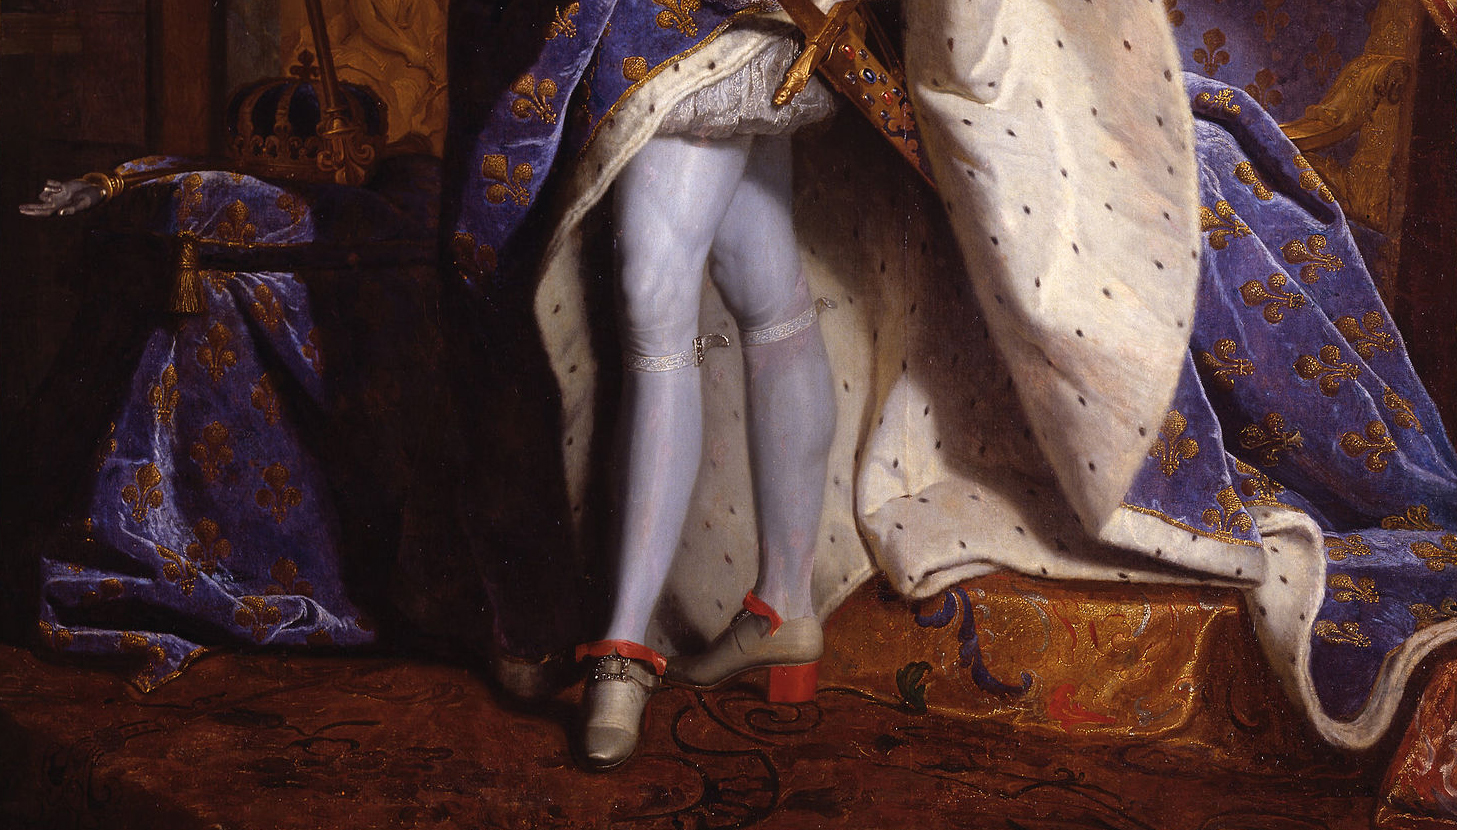 Portrait of Louis XIV - Wikipedia